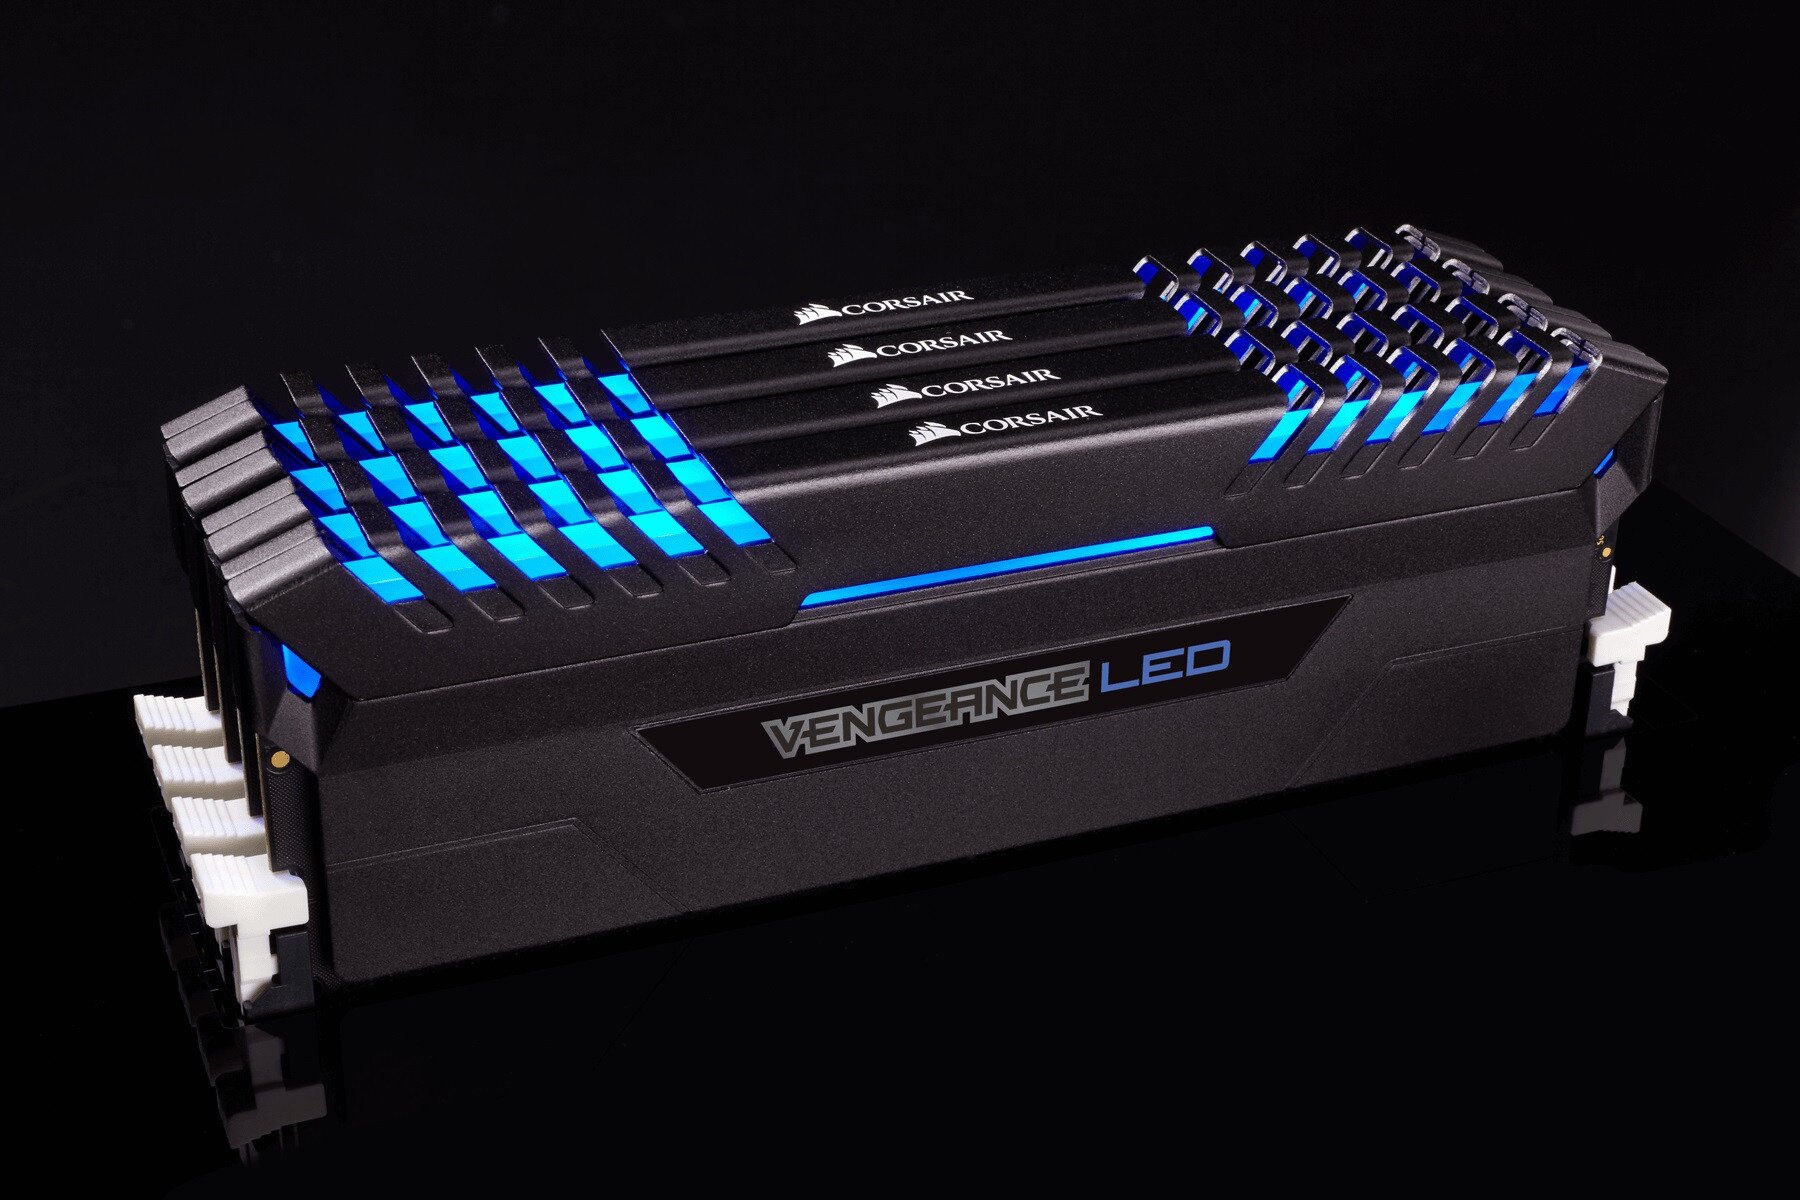 Buy Corsair Vengeance LED - 32GB (4 x 8GB) DDR4 DRAM - 2666MHz Memory Kit - Blue LED online Worldwide - Tejar.com